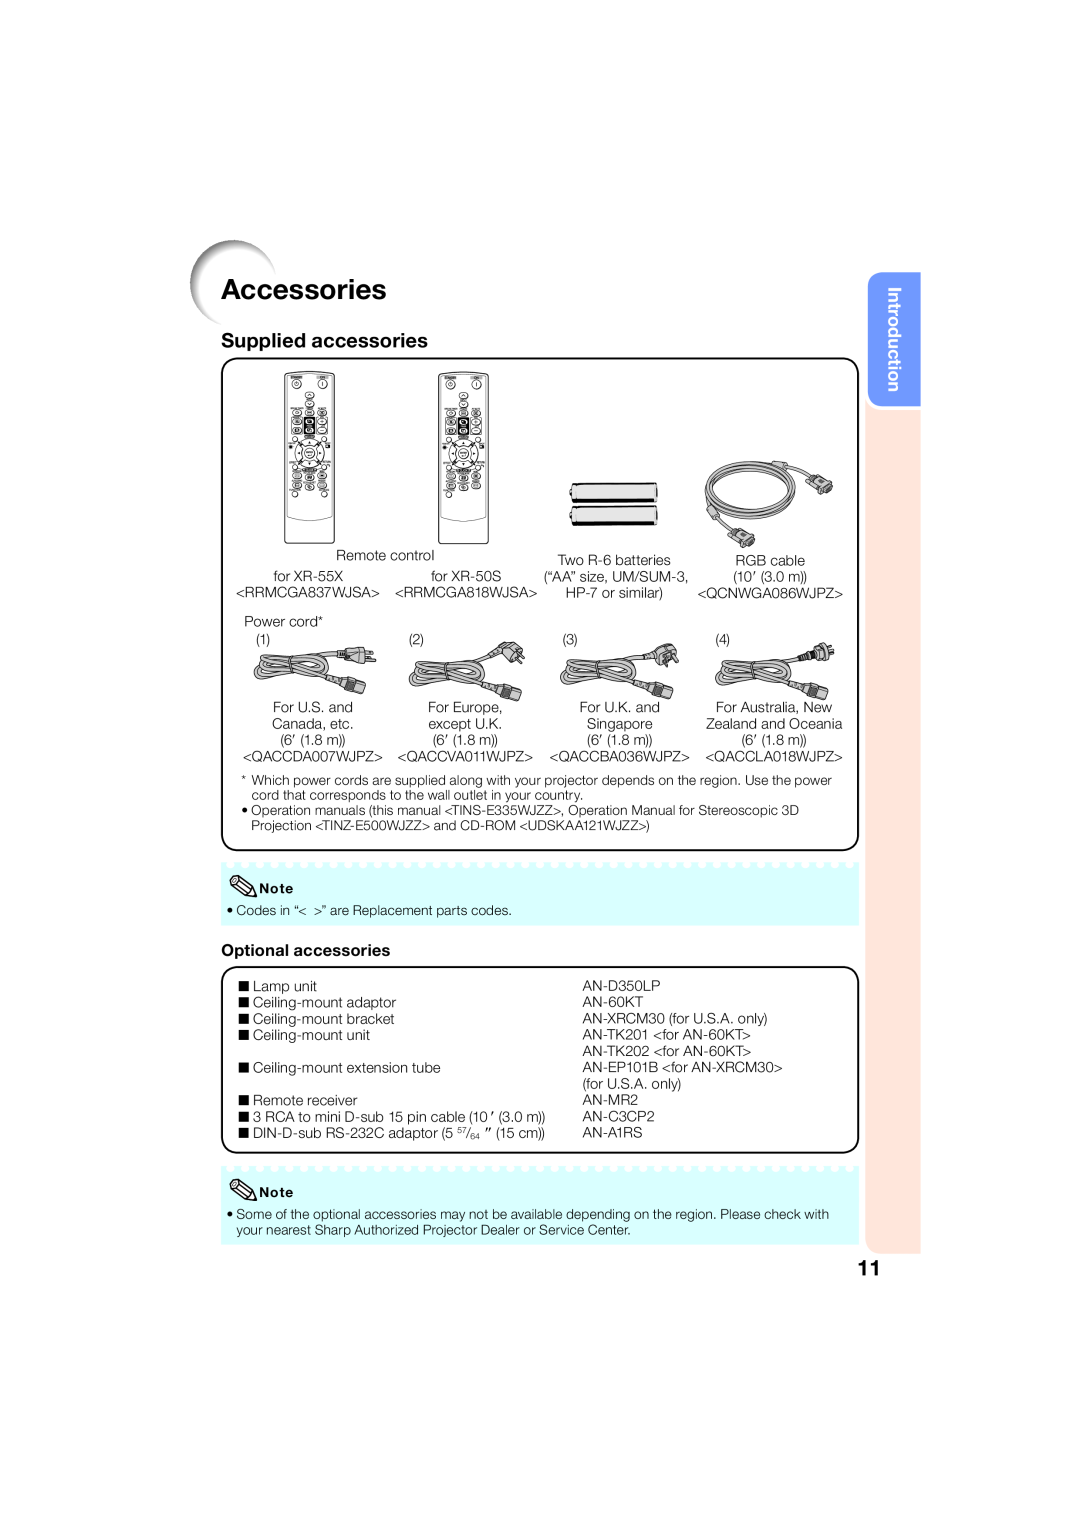 Sharp XR-50S, XR-55X appendix Accessories, Supplied accessories, Optional accessories, Introduction 